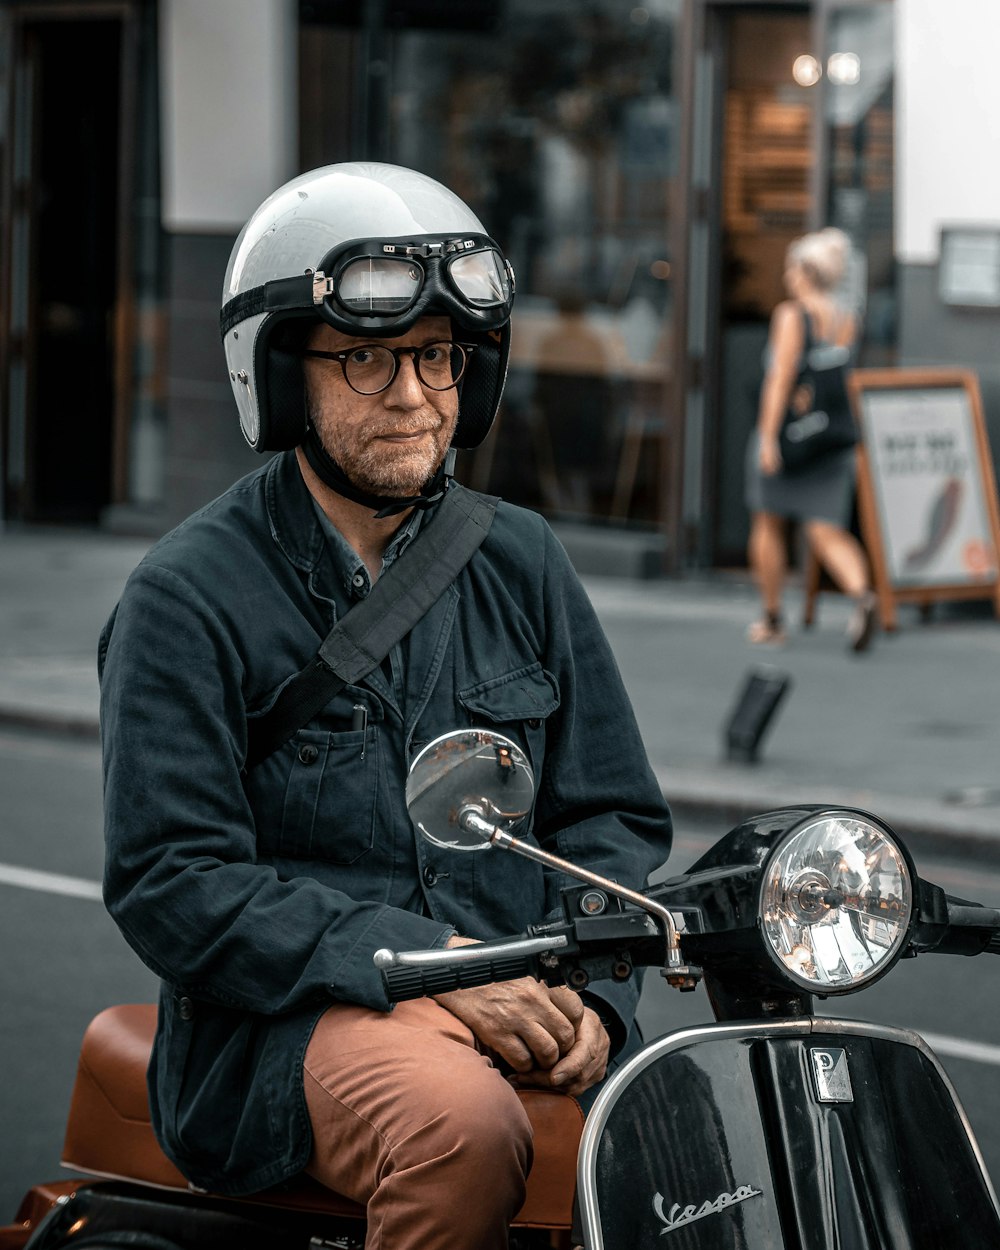 man in black jacket and helmet riding motorcycle